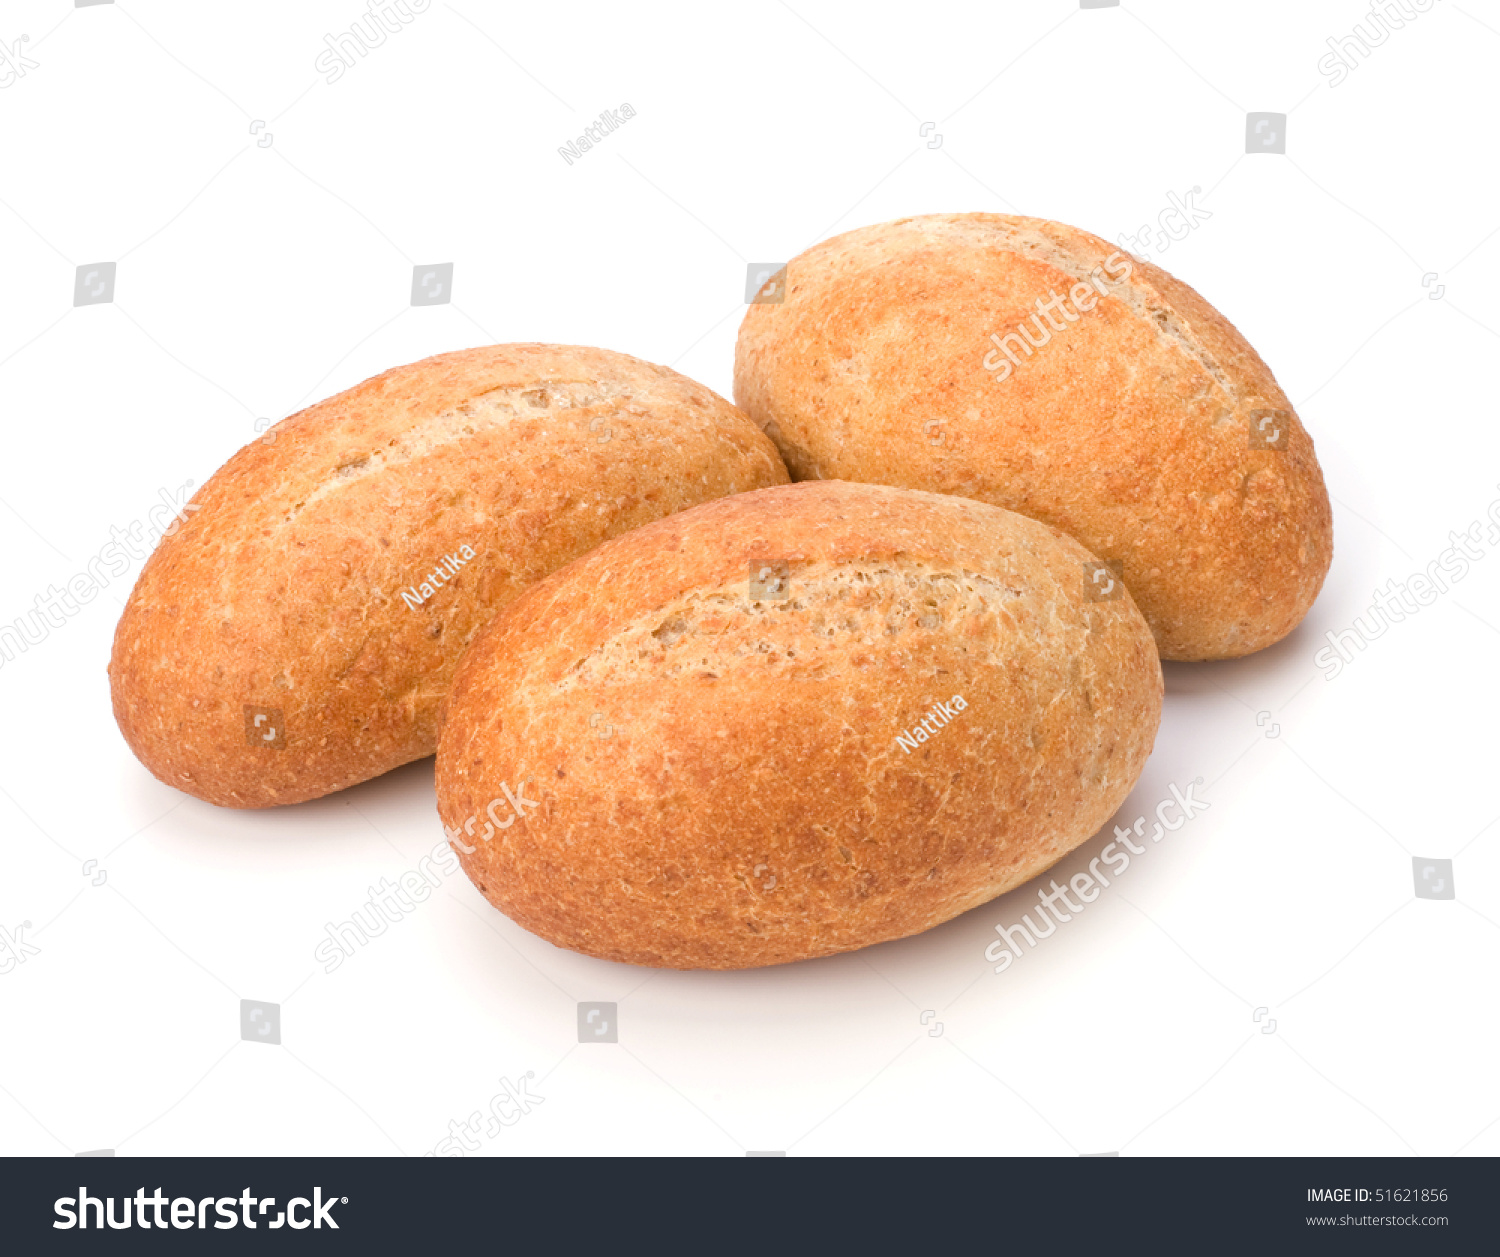 fresh warm rolls isolated on white background #51621856